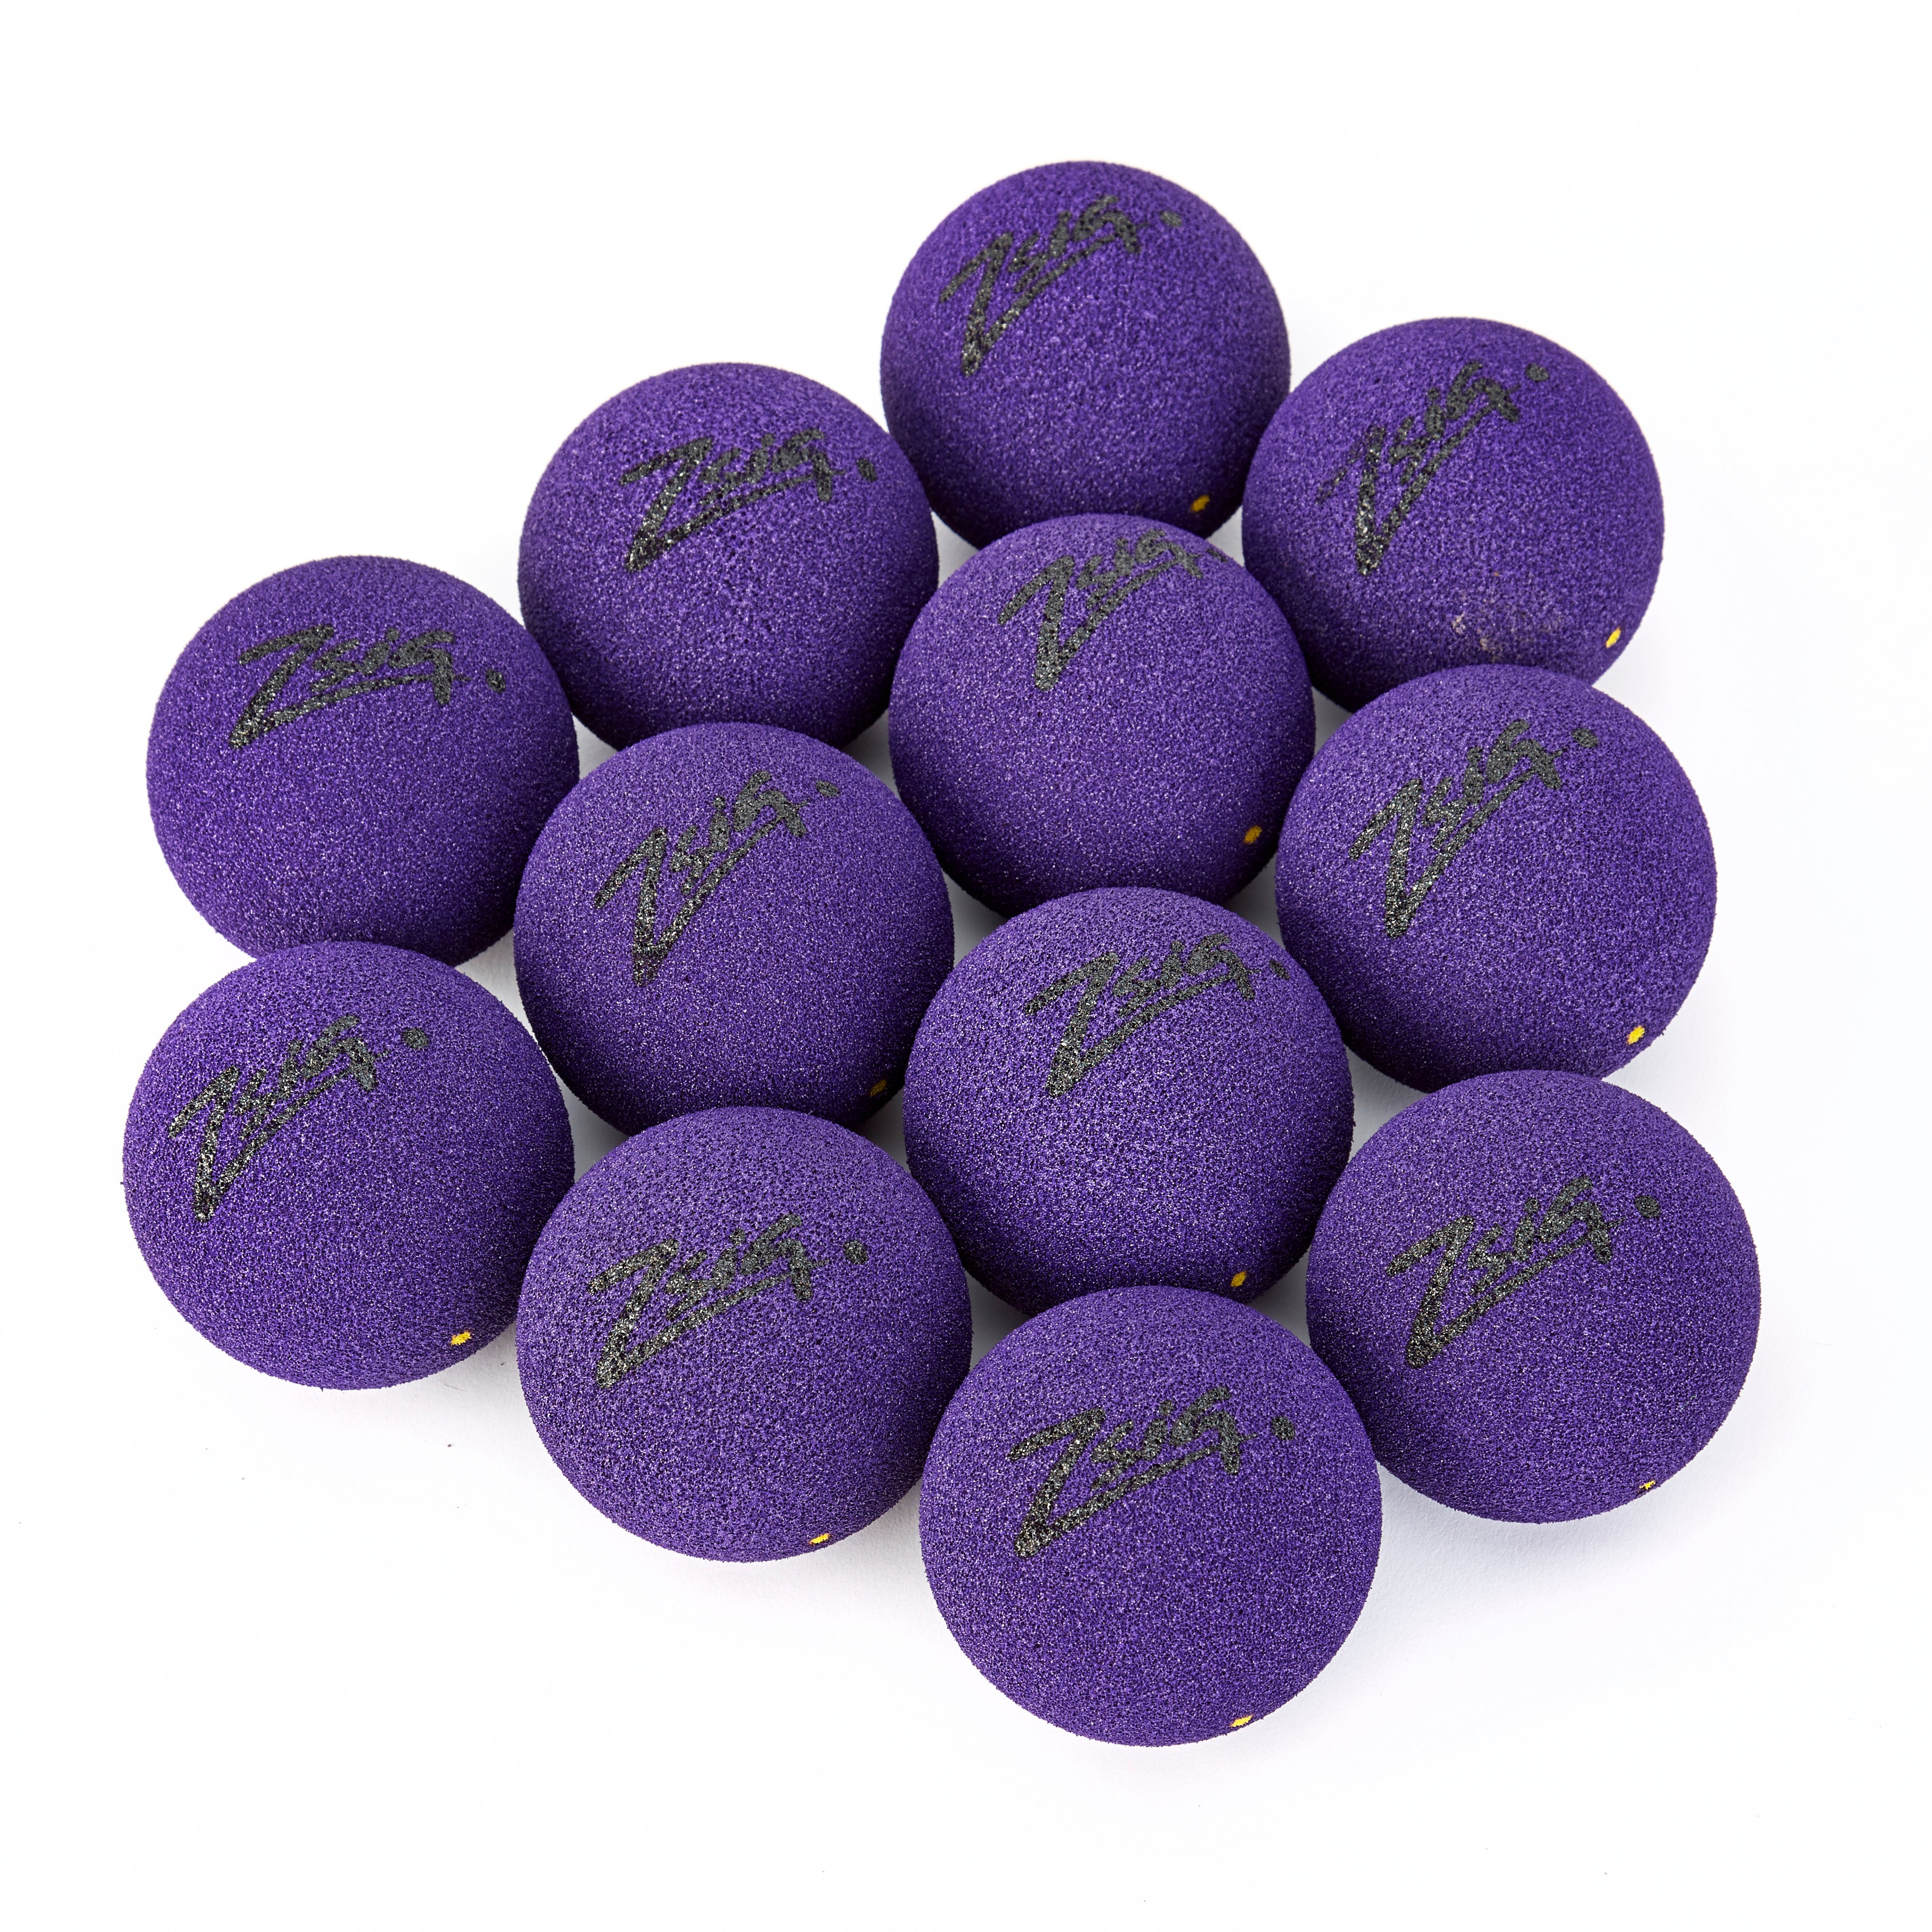 Zsig MP9 Tough Guy sponge ball in purple - a dozen